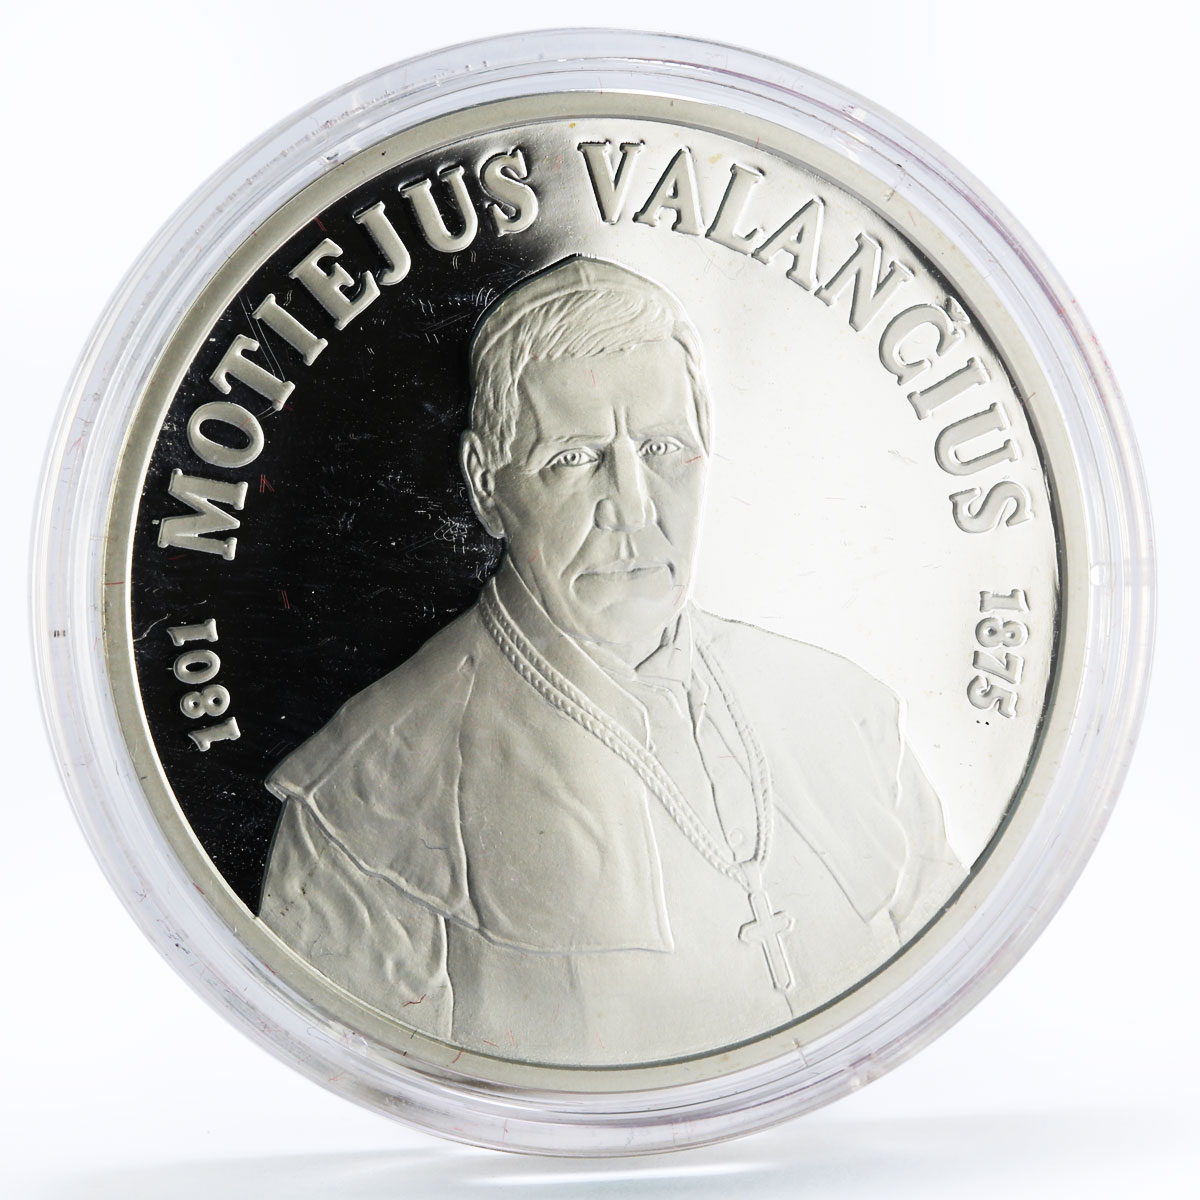 Lithuania 50 litu 200th Anniversary of Motiejus Valancius proof silver coin 2001